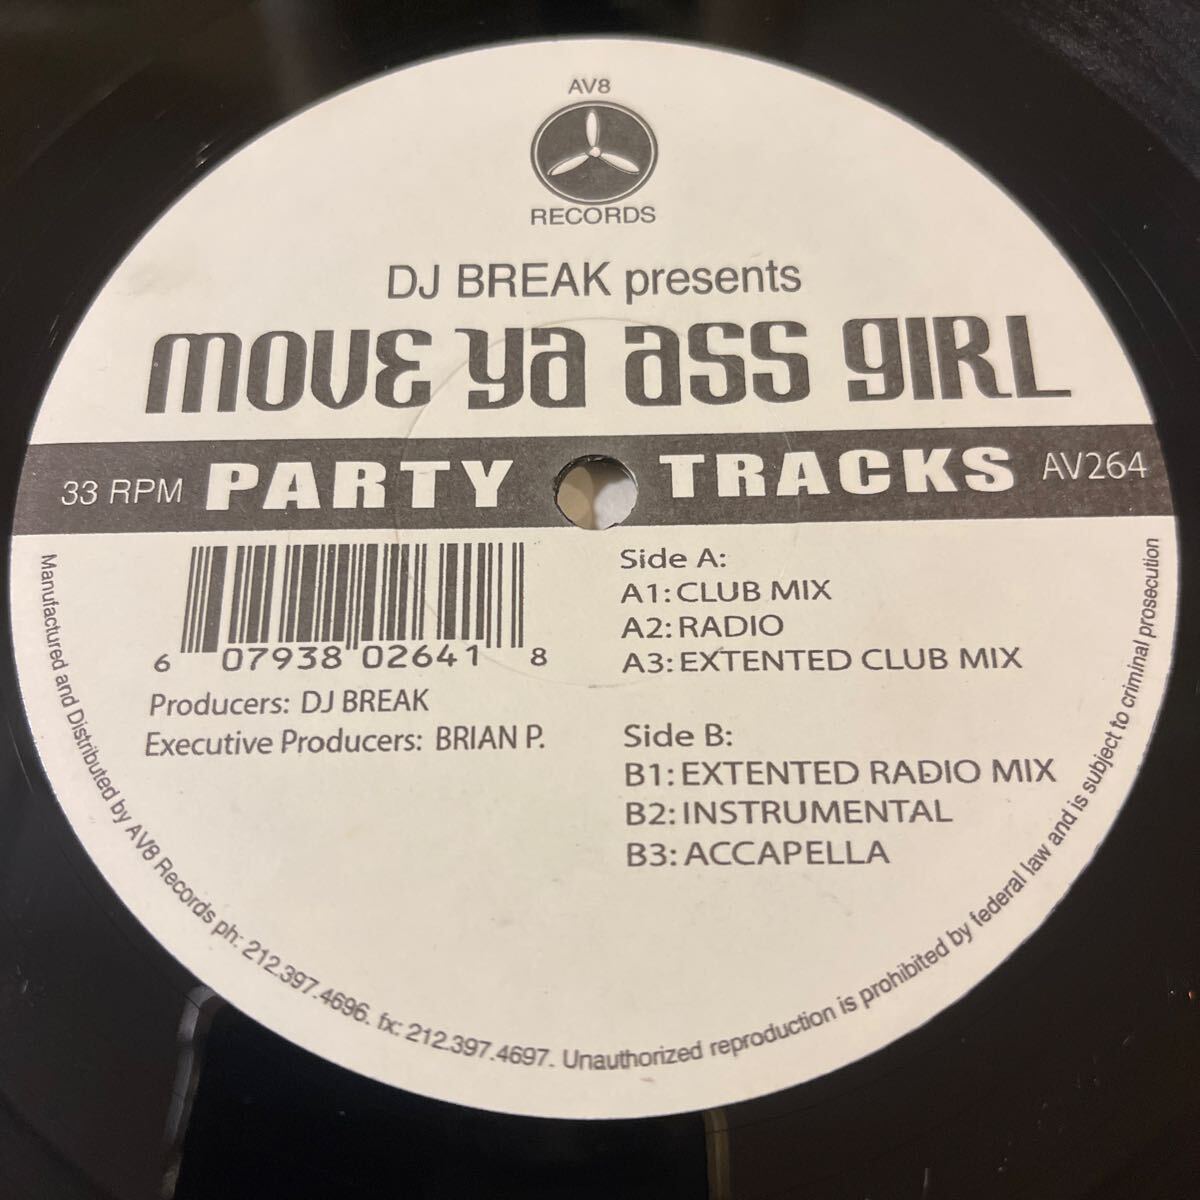 AV8/DJ BREAK presents/move ya ass girl/PARTY TRACKS/AV264/レコード/中古/DJ/CLUB/HIPHOP_画像2